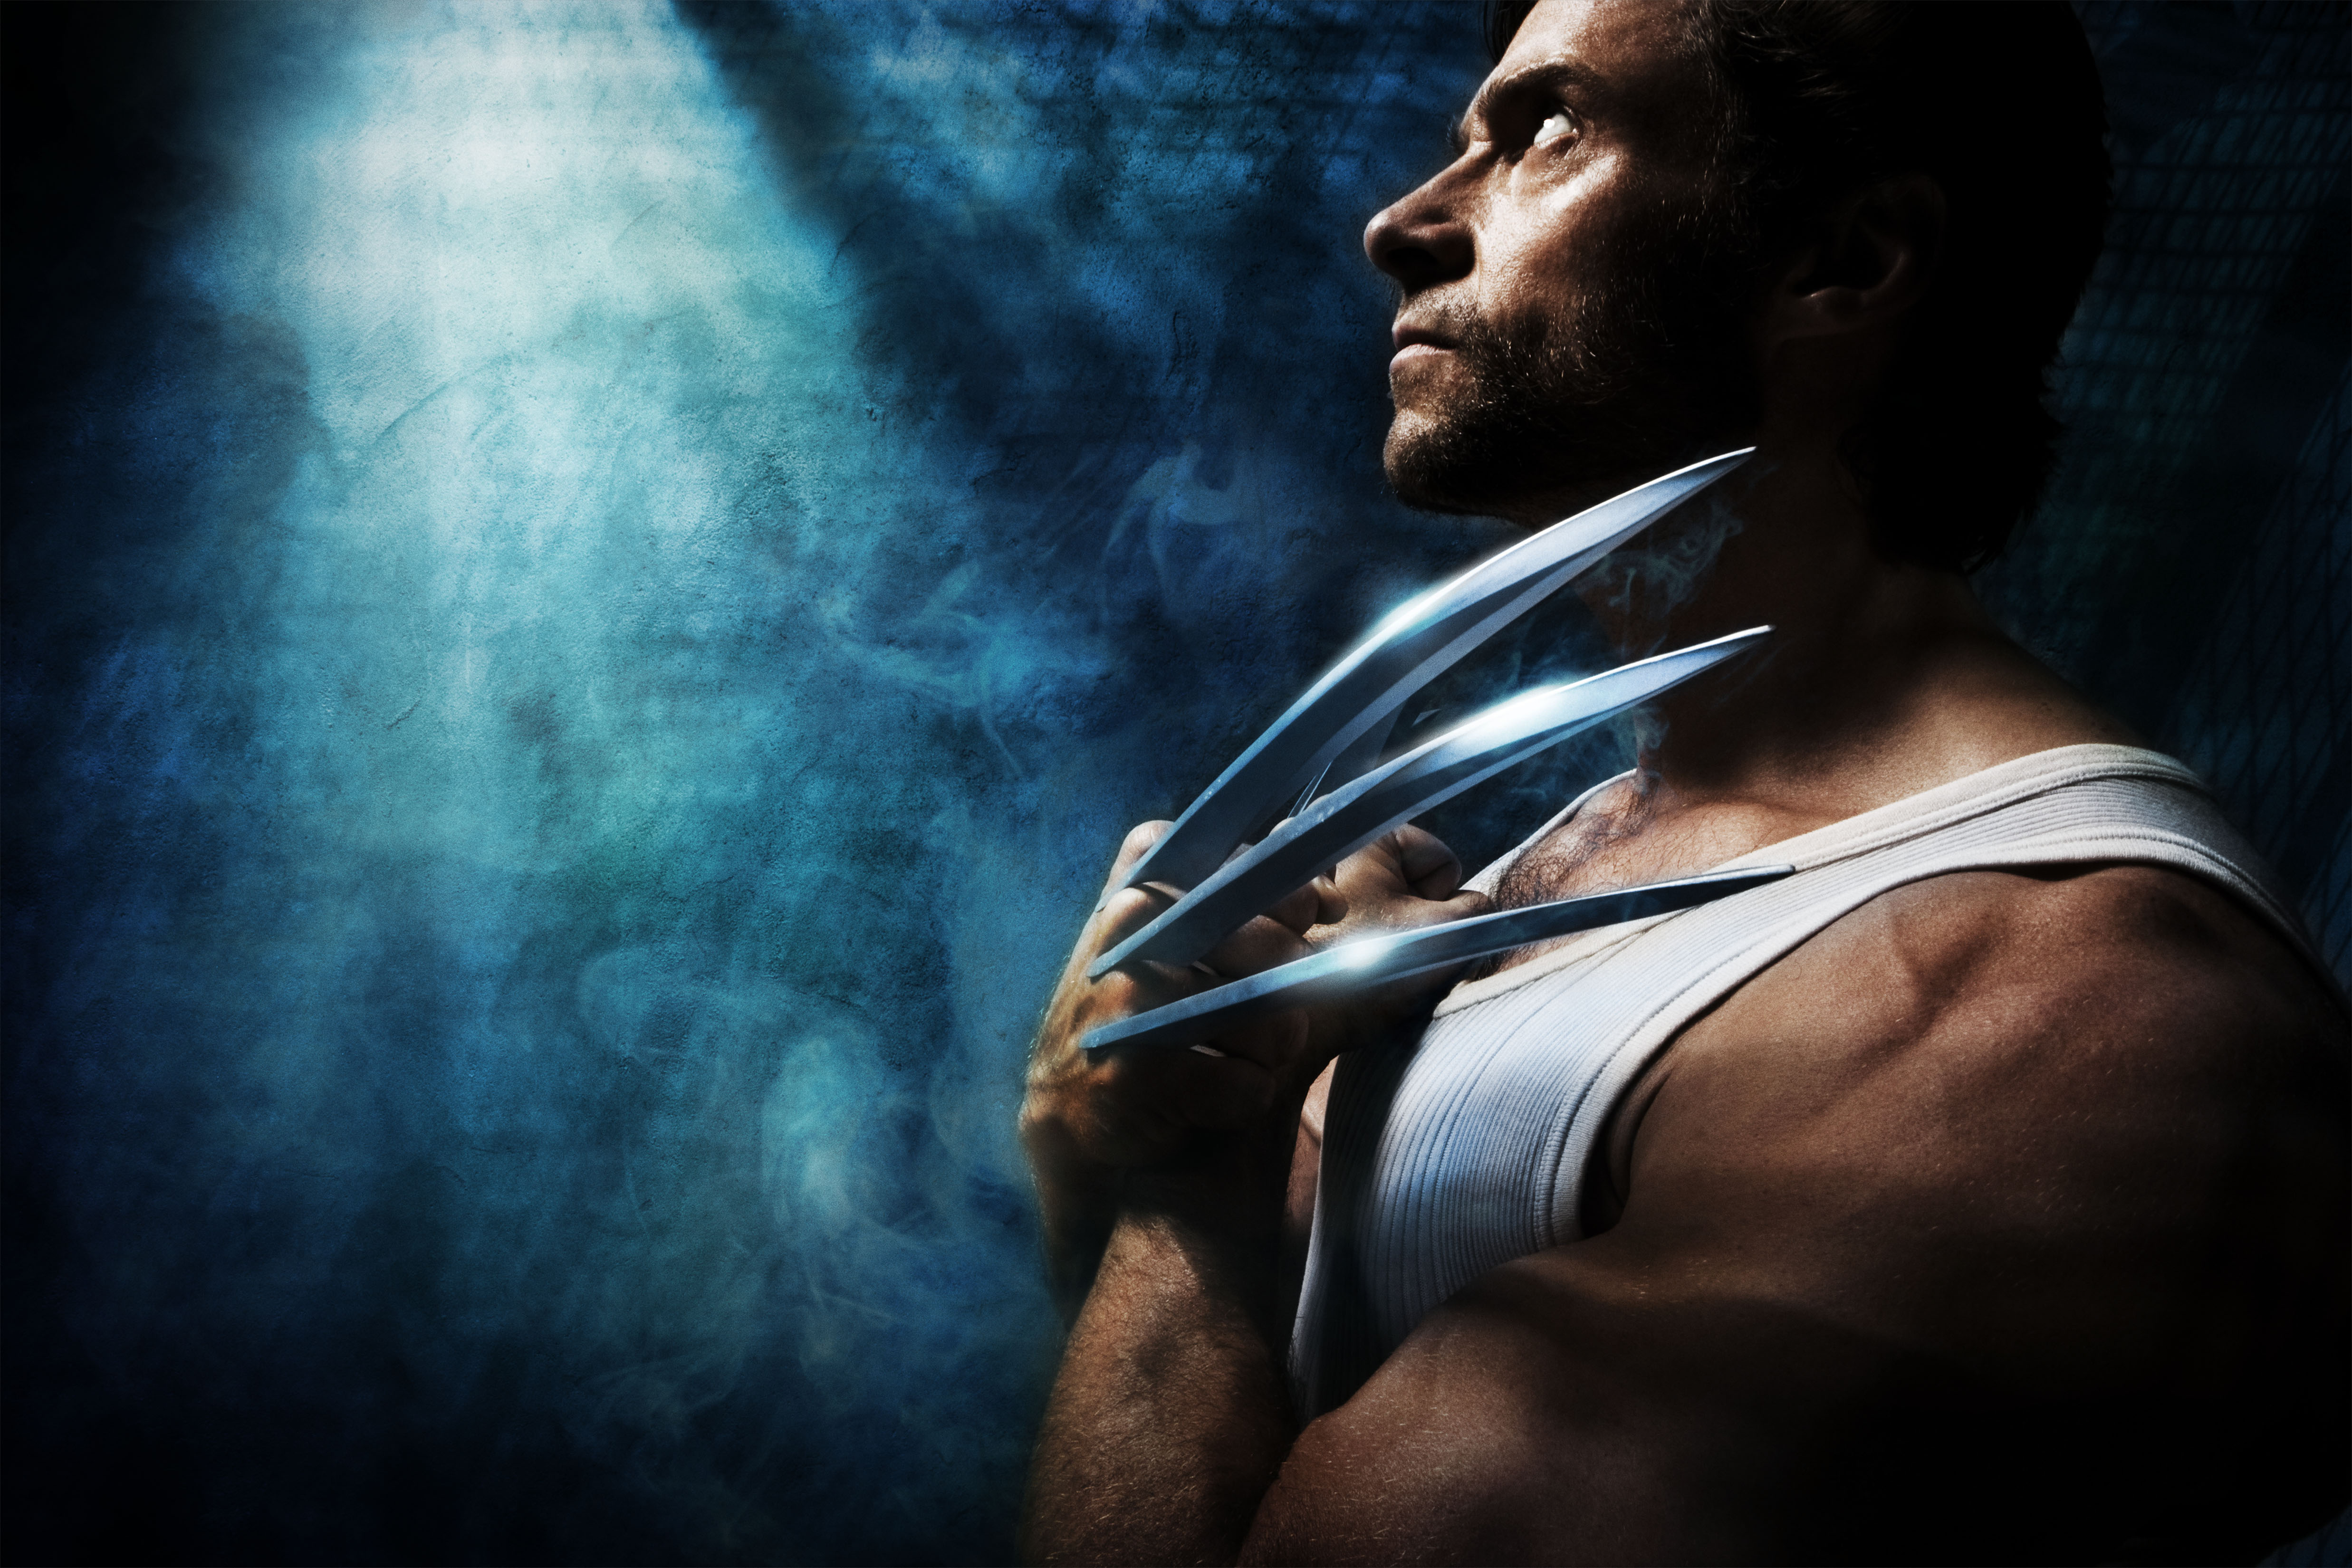 Hugh Jackman Wolverine Origins